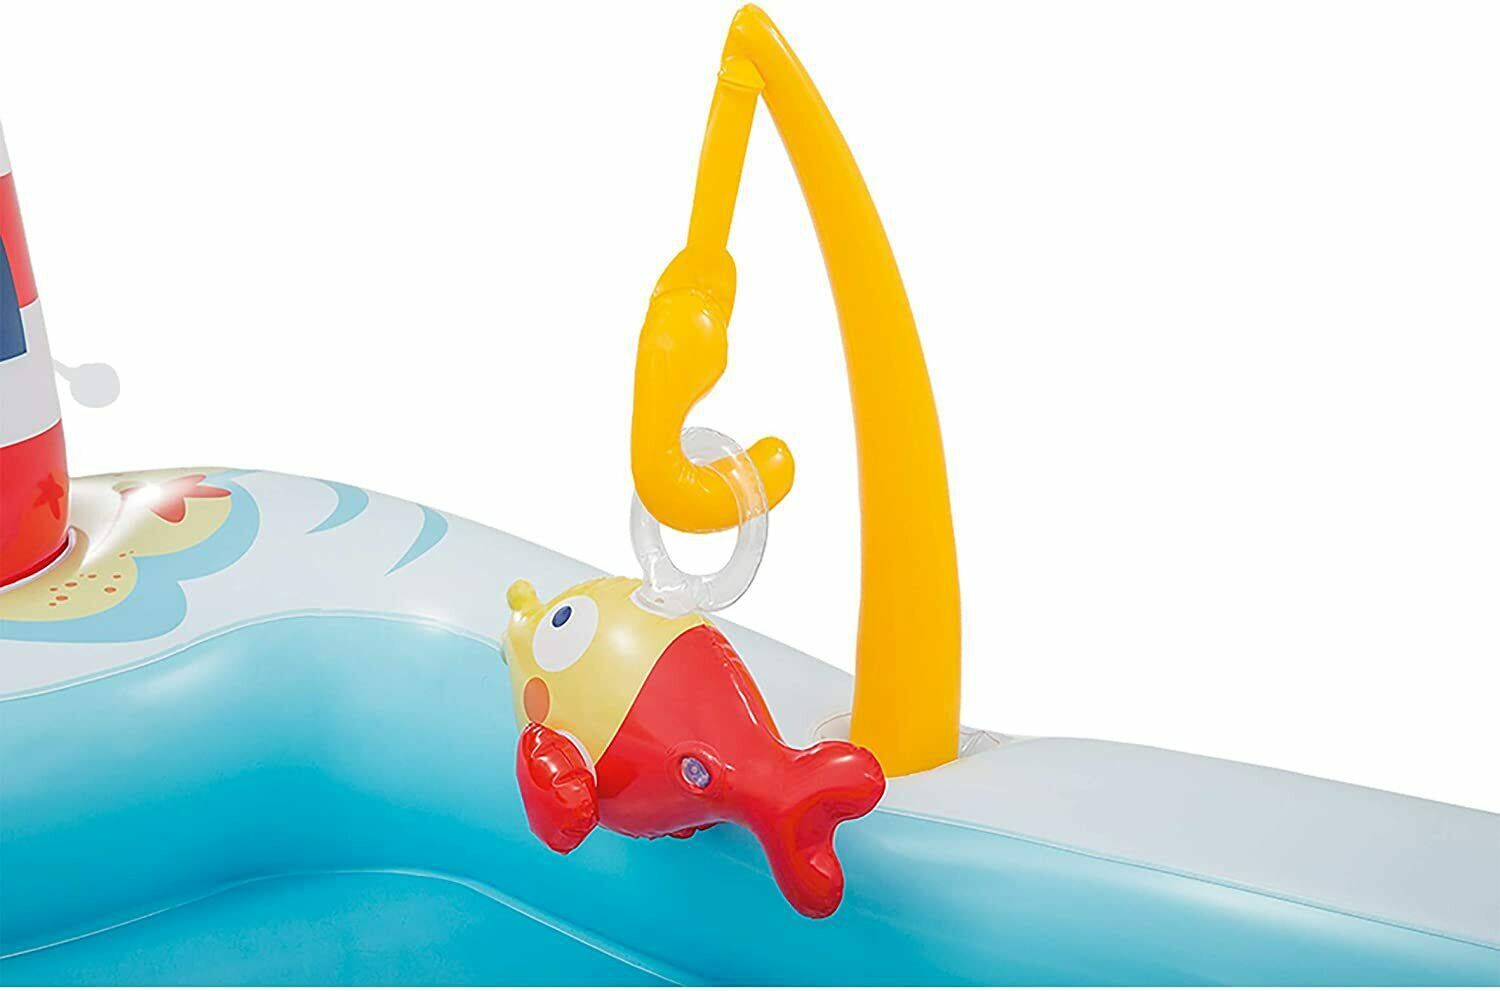 Water Slide Inflatable Pool Play